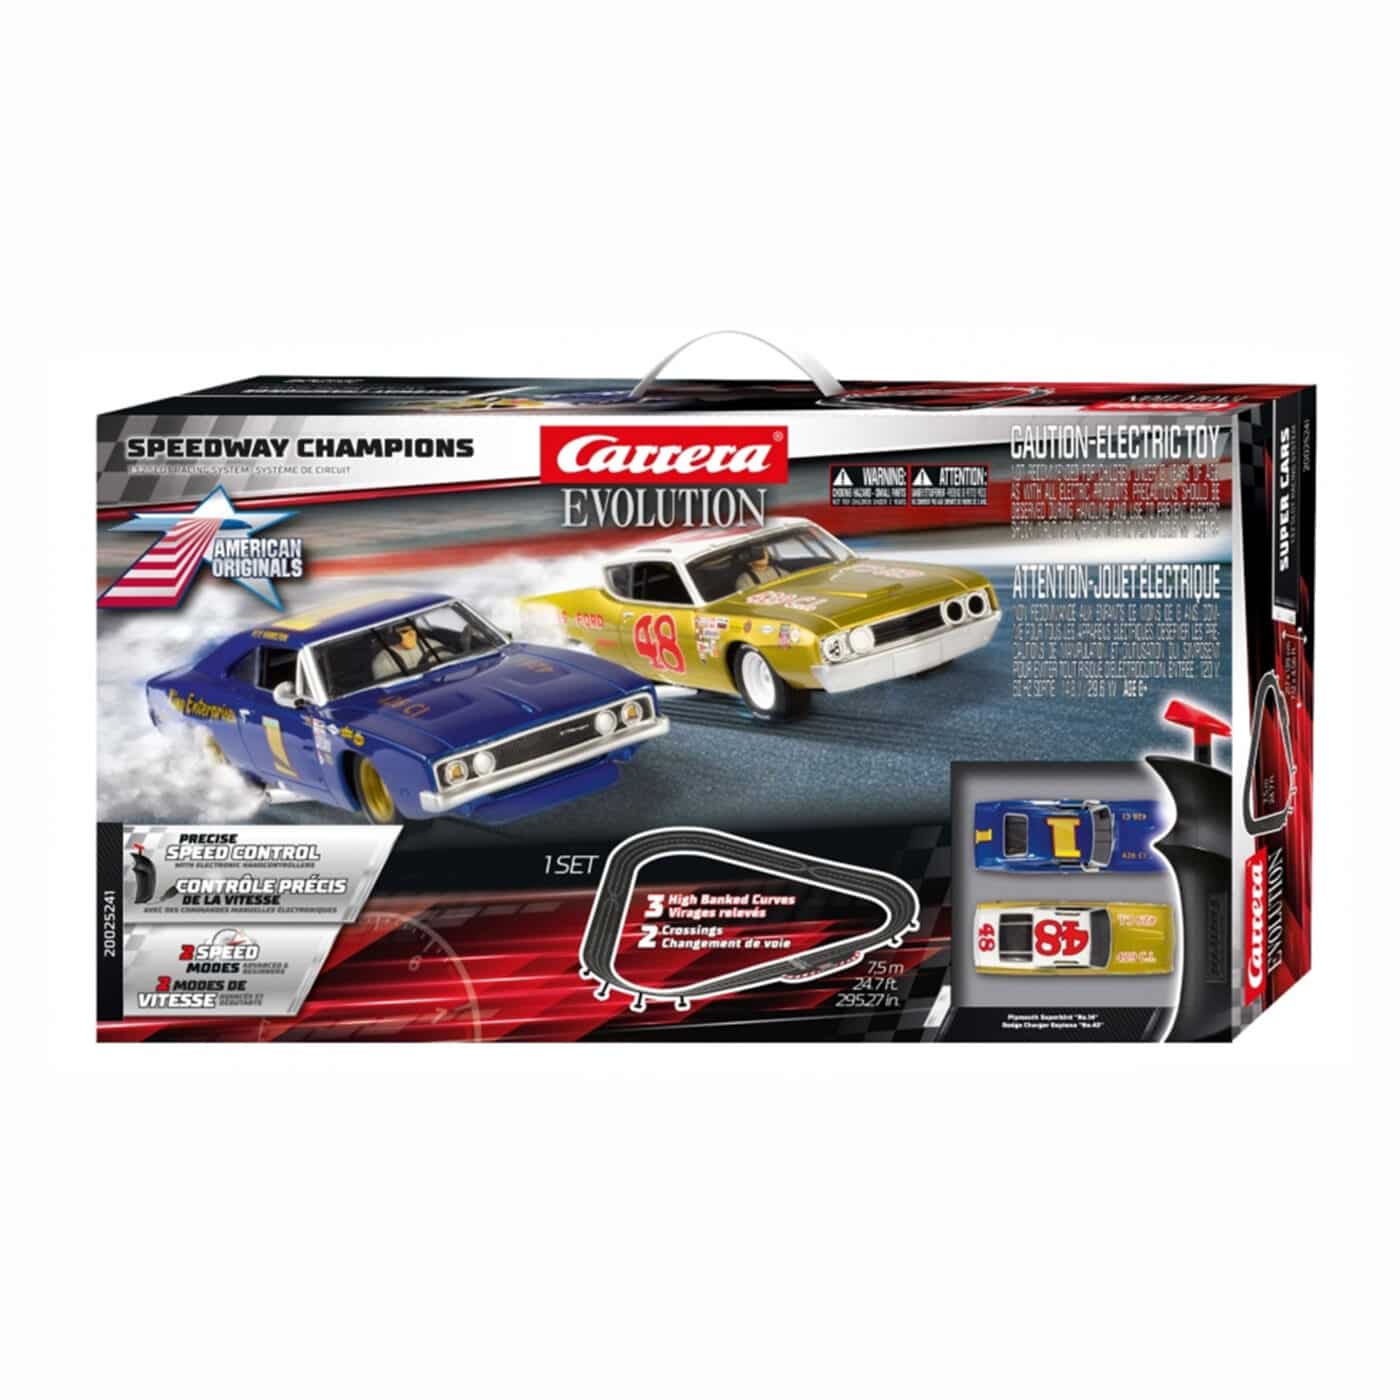 Carrera-25241-Evolution-132-Speedway-Champions